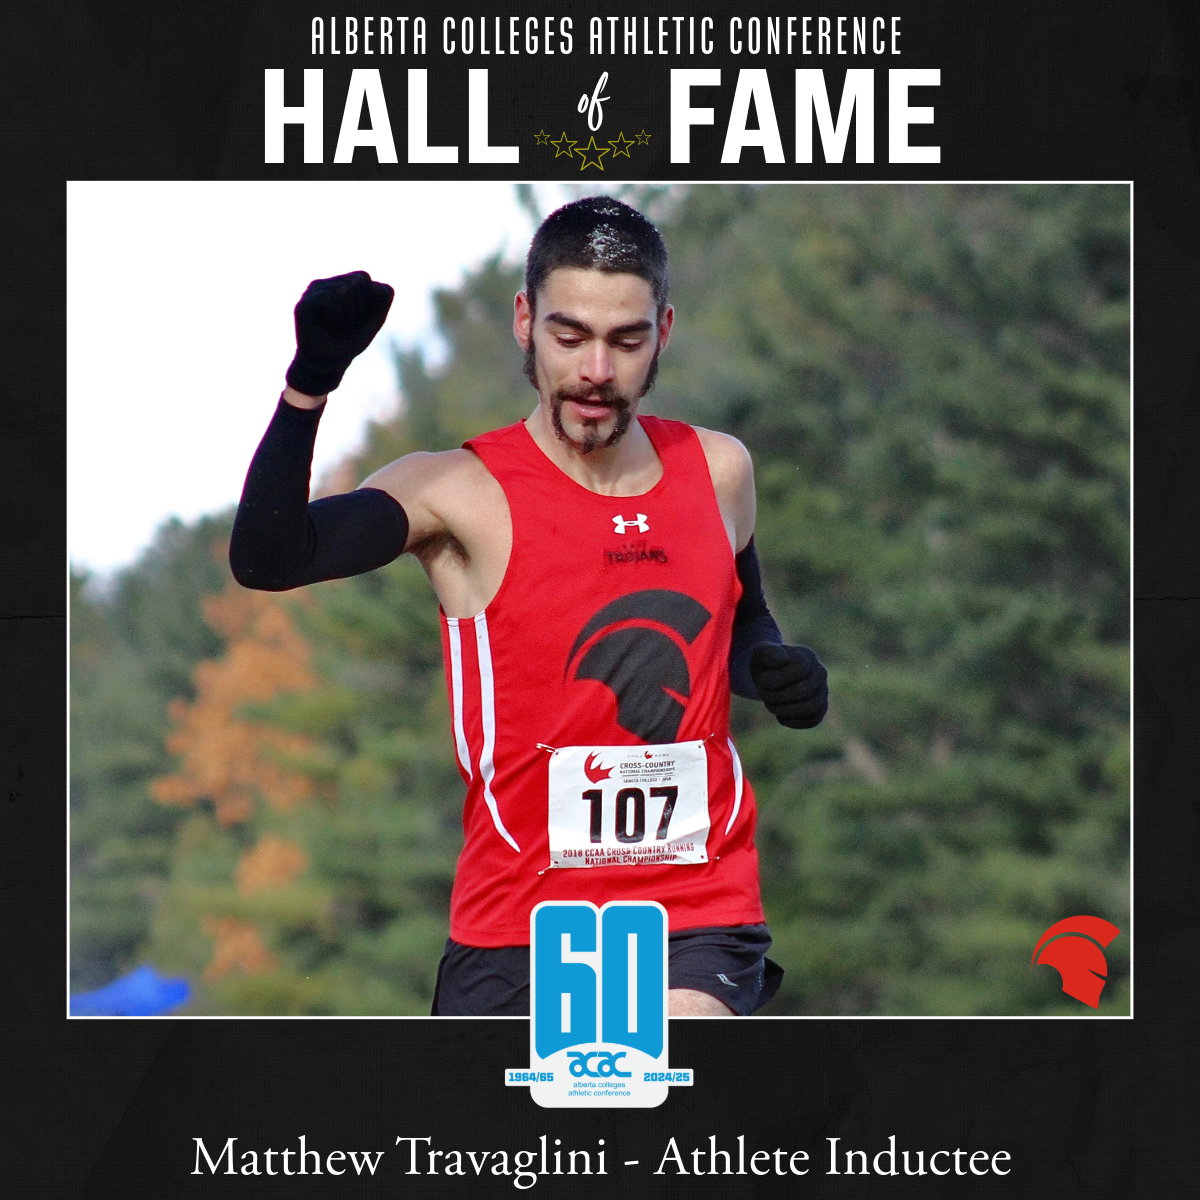 ACAC Hall of Fame Athlete Inductee: Matthew Travaglini